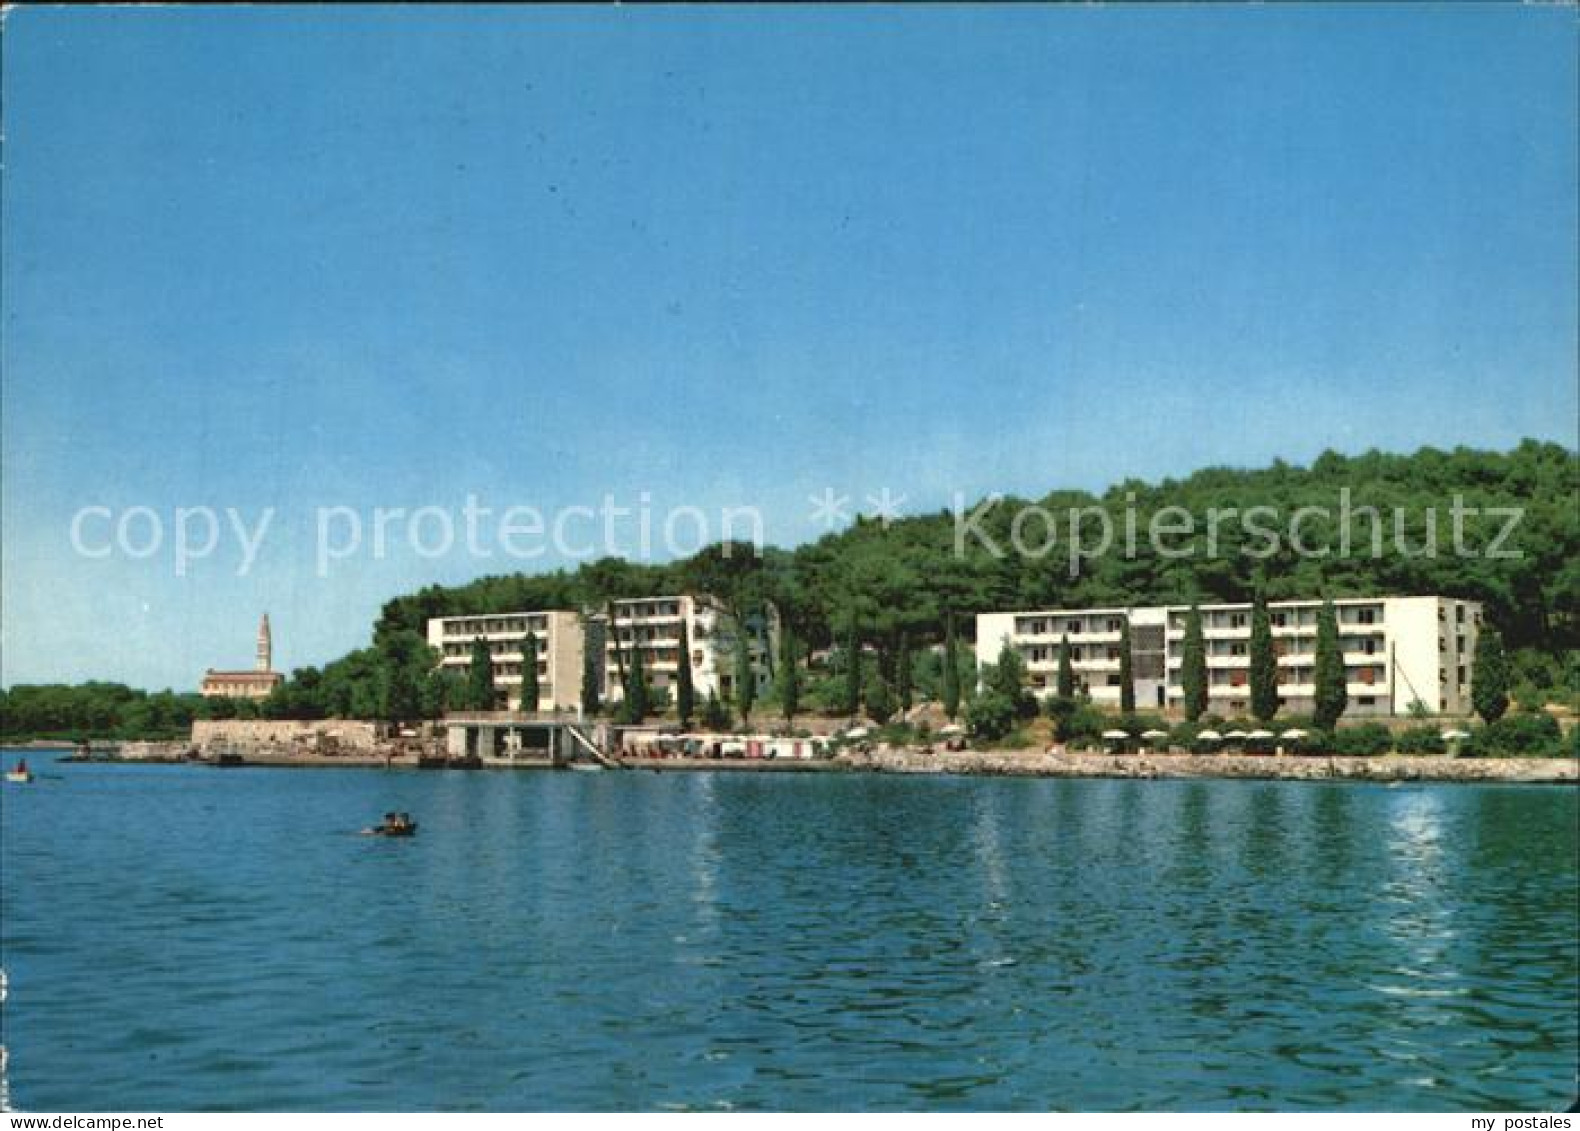 72523463 Rovinj Istrien Hotel Monte Mulin  - Croatia